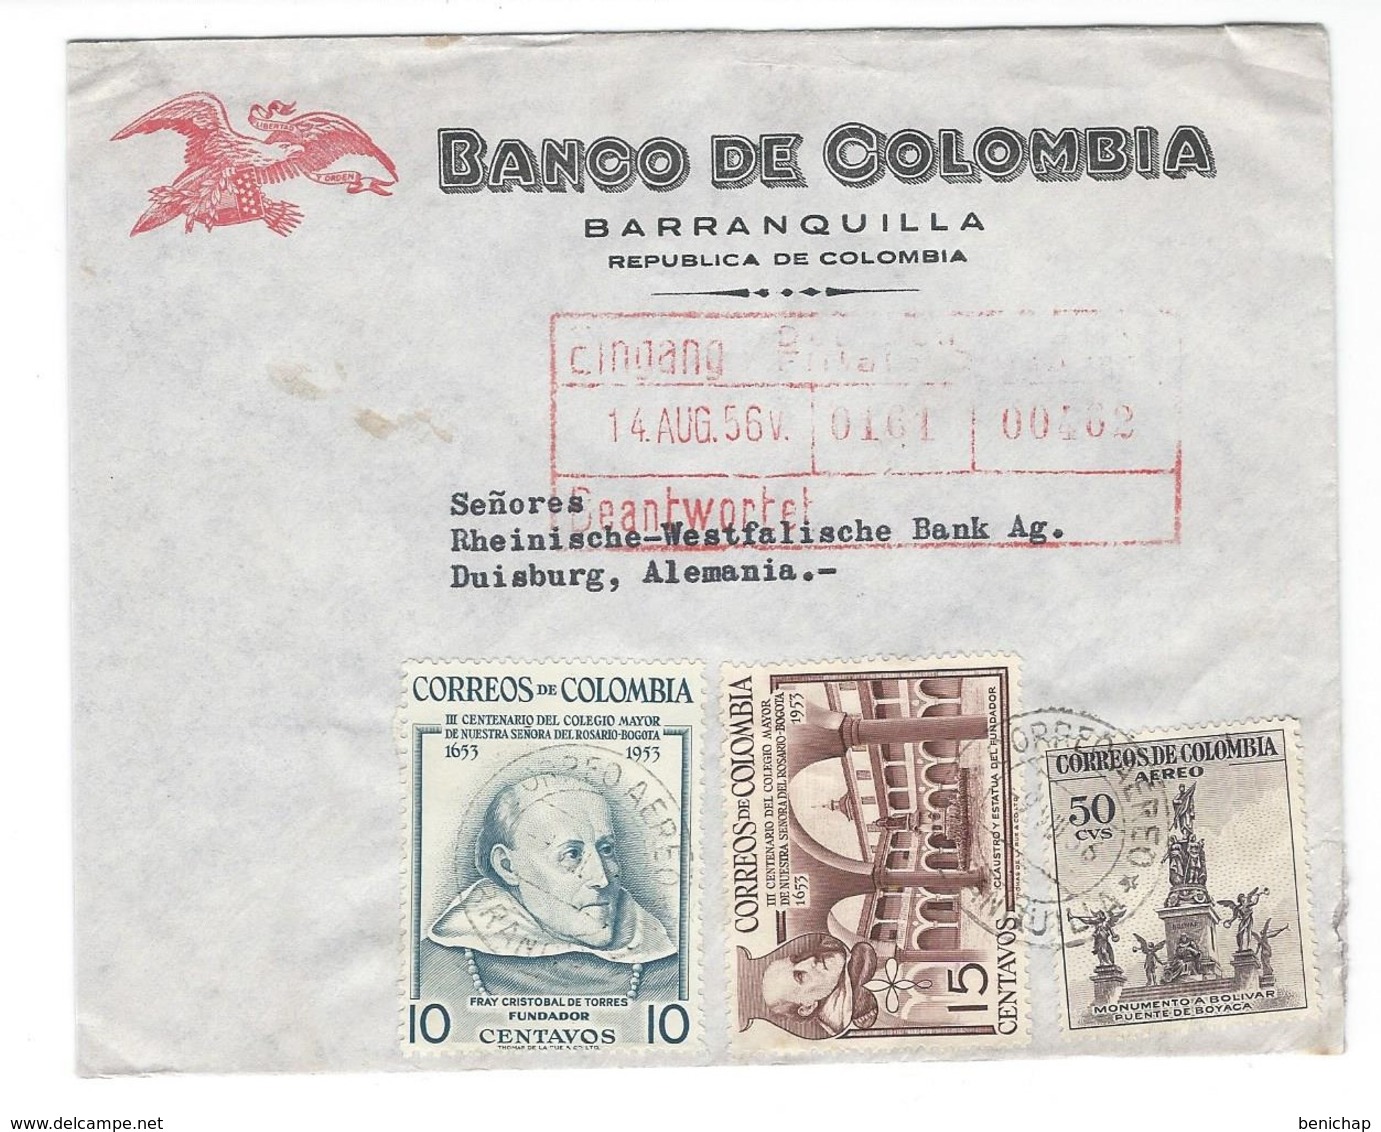 COVER CORREO COLOMBIA - BANCO DE COLOMBIA - BARRANQUILLA - DUISBURG - GERMANY. - Colombia